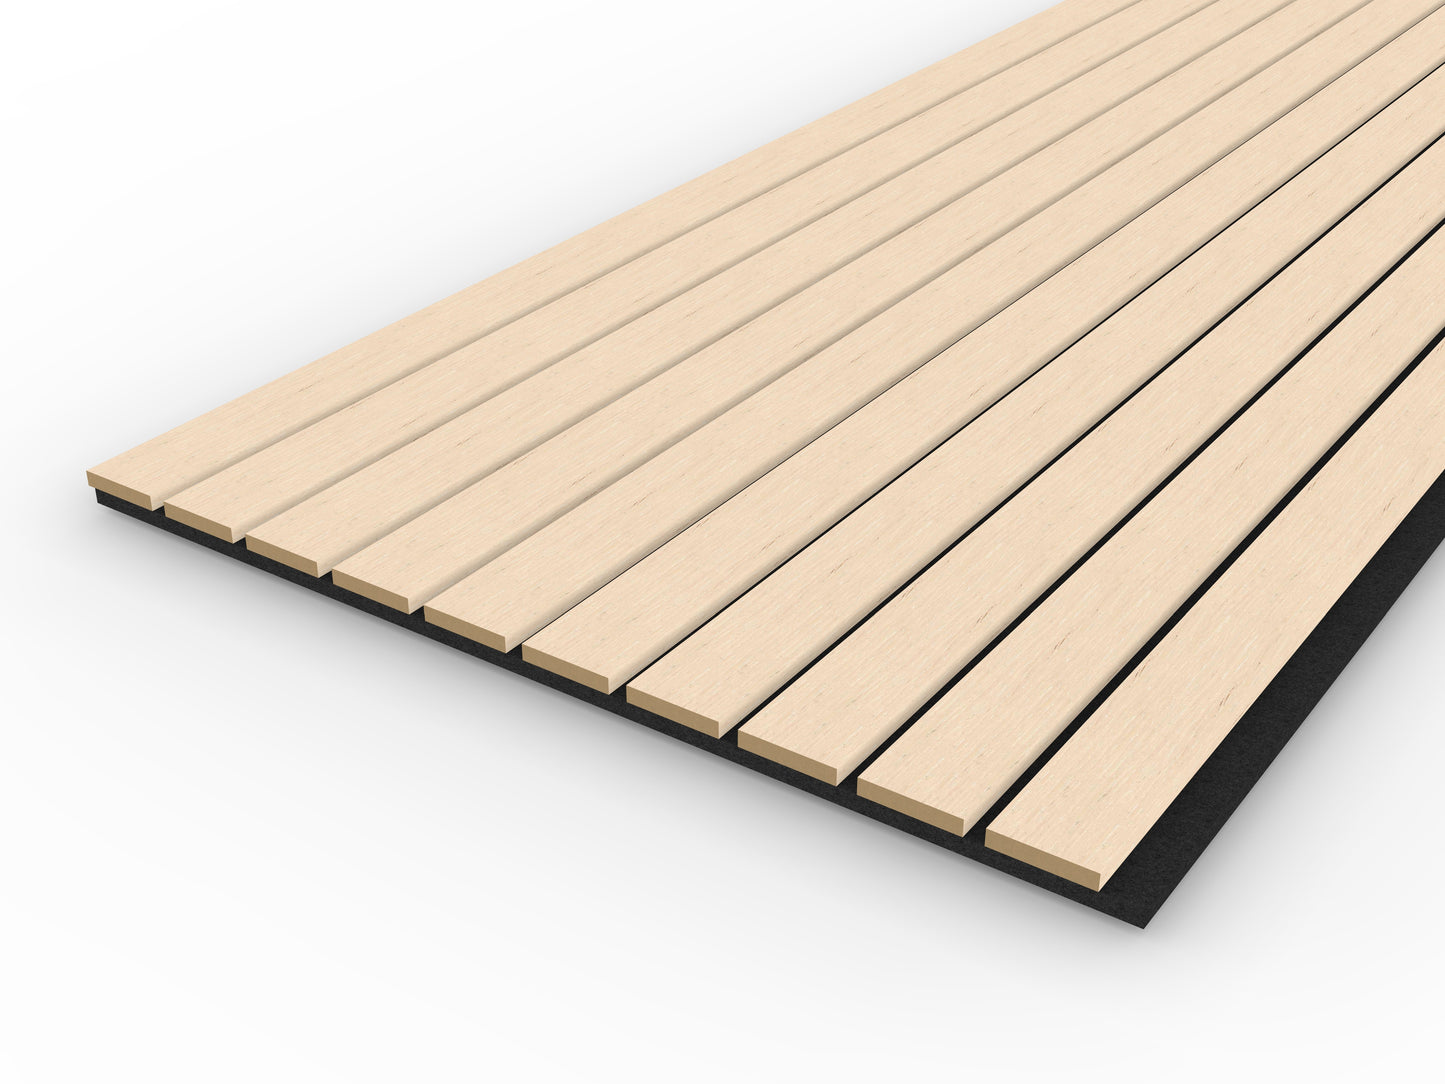 Washed Oak Acoustic Wood Wall Panel Wide Slat Series 2 Sample